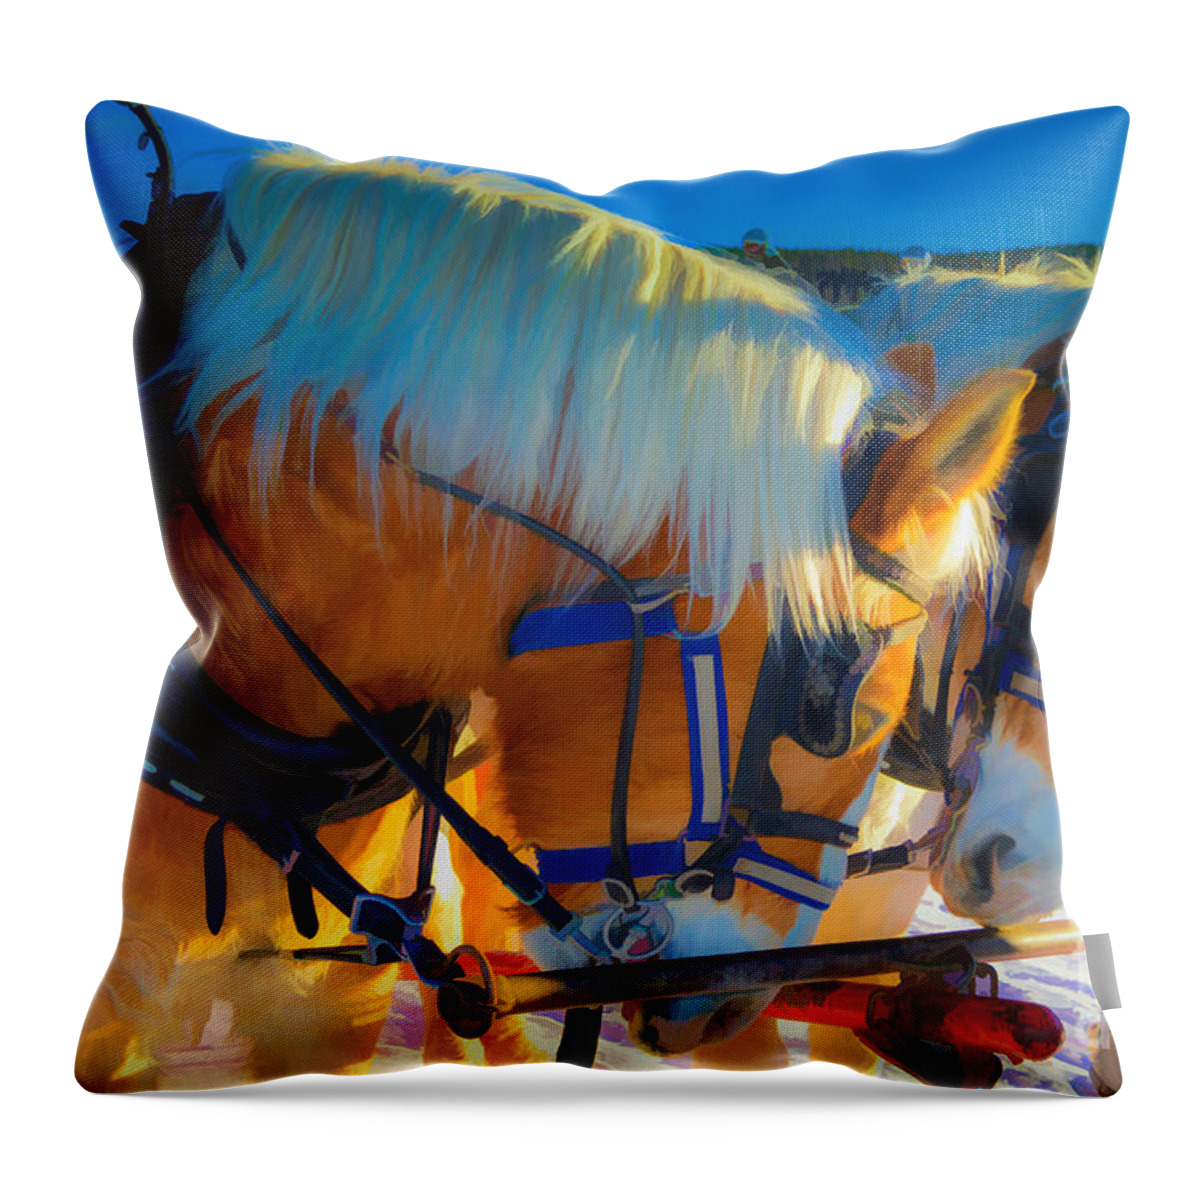 Horse Throw Pillow featuring the photograph A Child's Love by Jim Schlottman